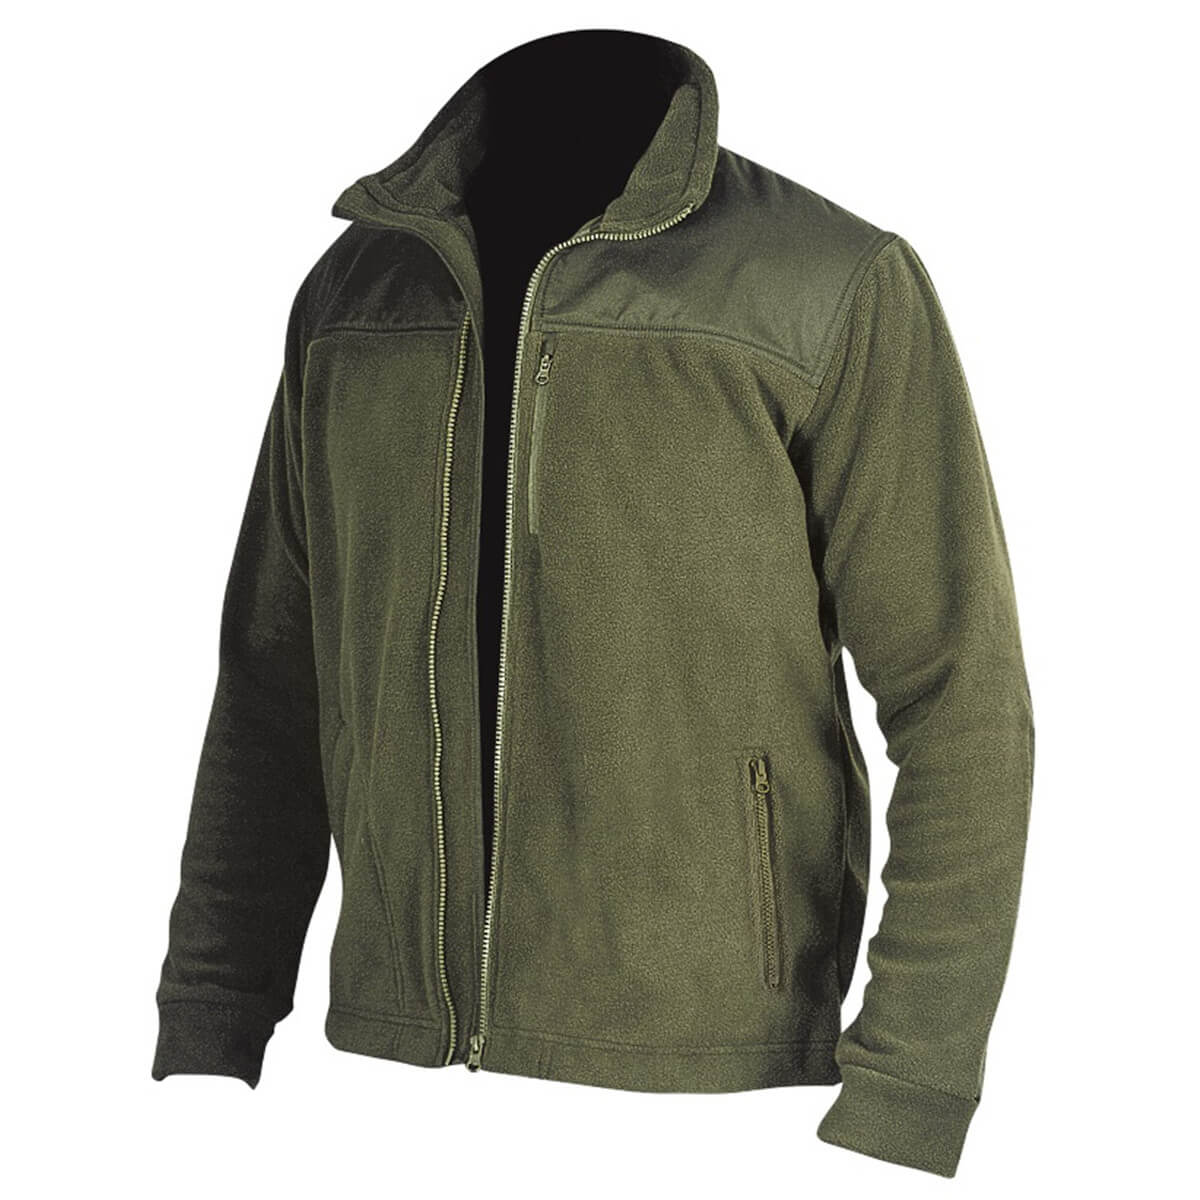 Fleece mikina s vložkami,280 g/m2, vel. L,barva zelená army DEDRA BH6PA-L